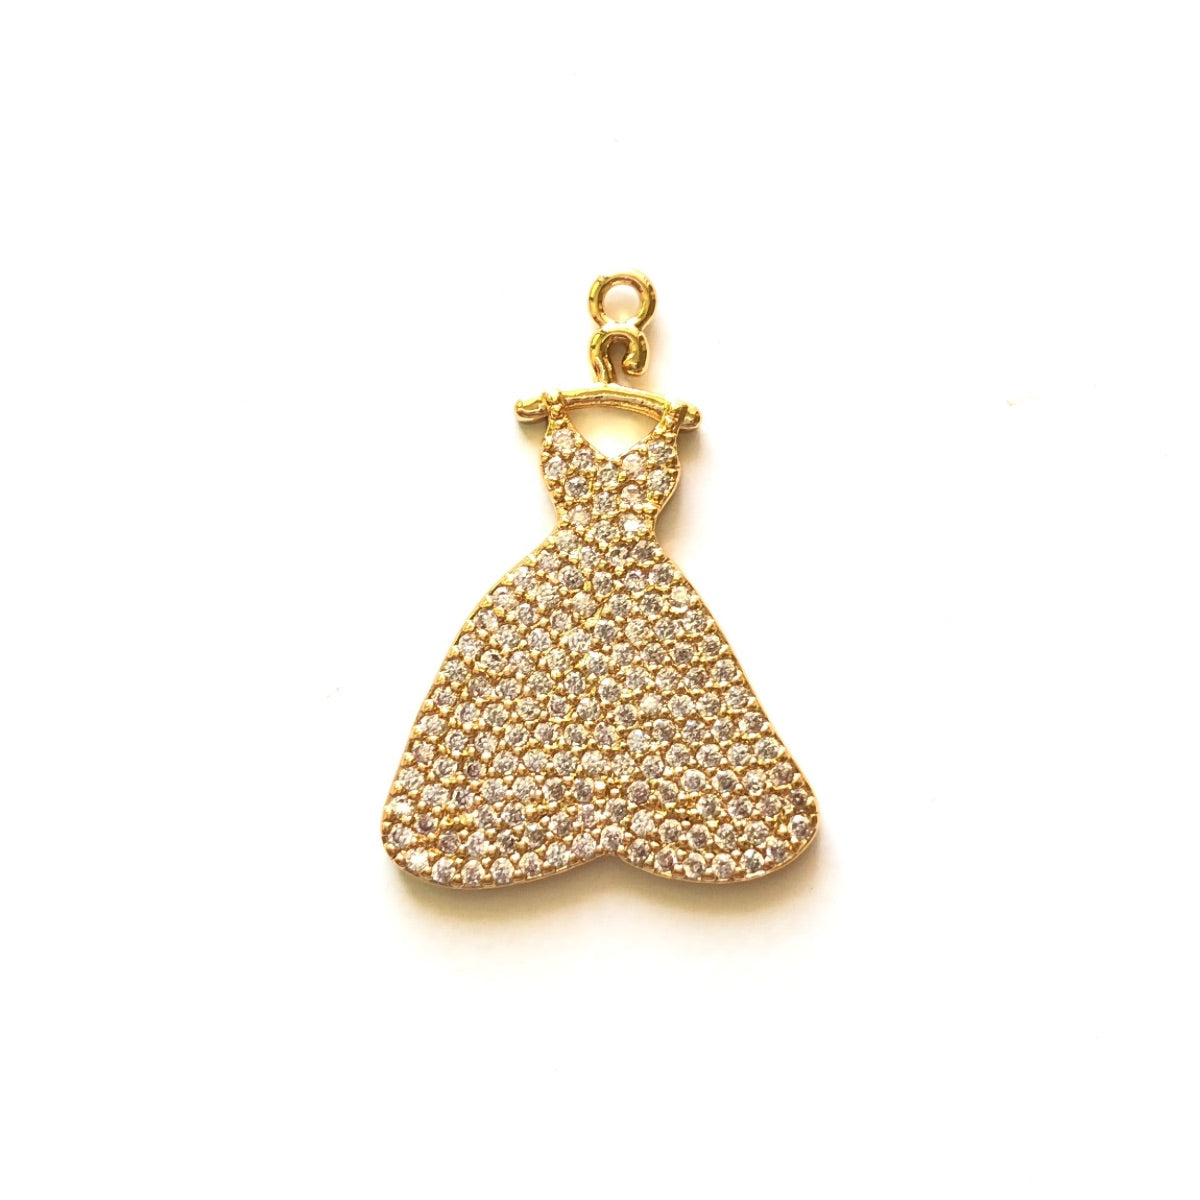 10pcs/lot 31*21mm CZ Paved Dress Charms Gold CZ Paved Charms Fashion Charms Beads Beyond